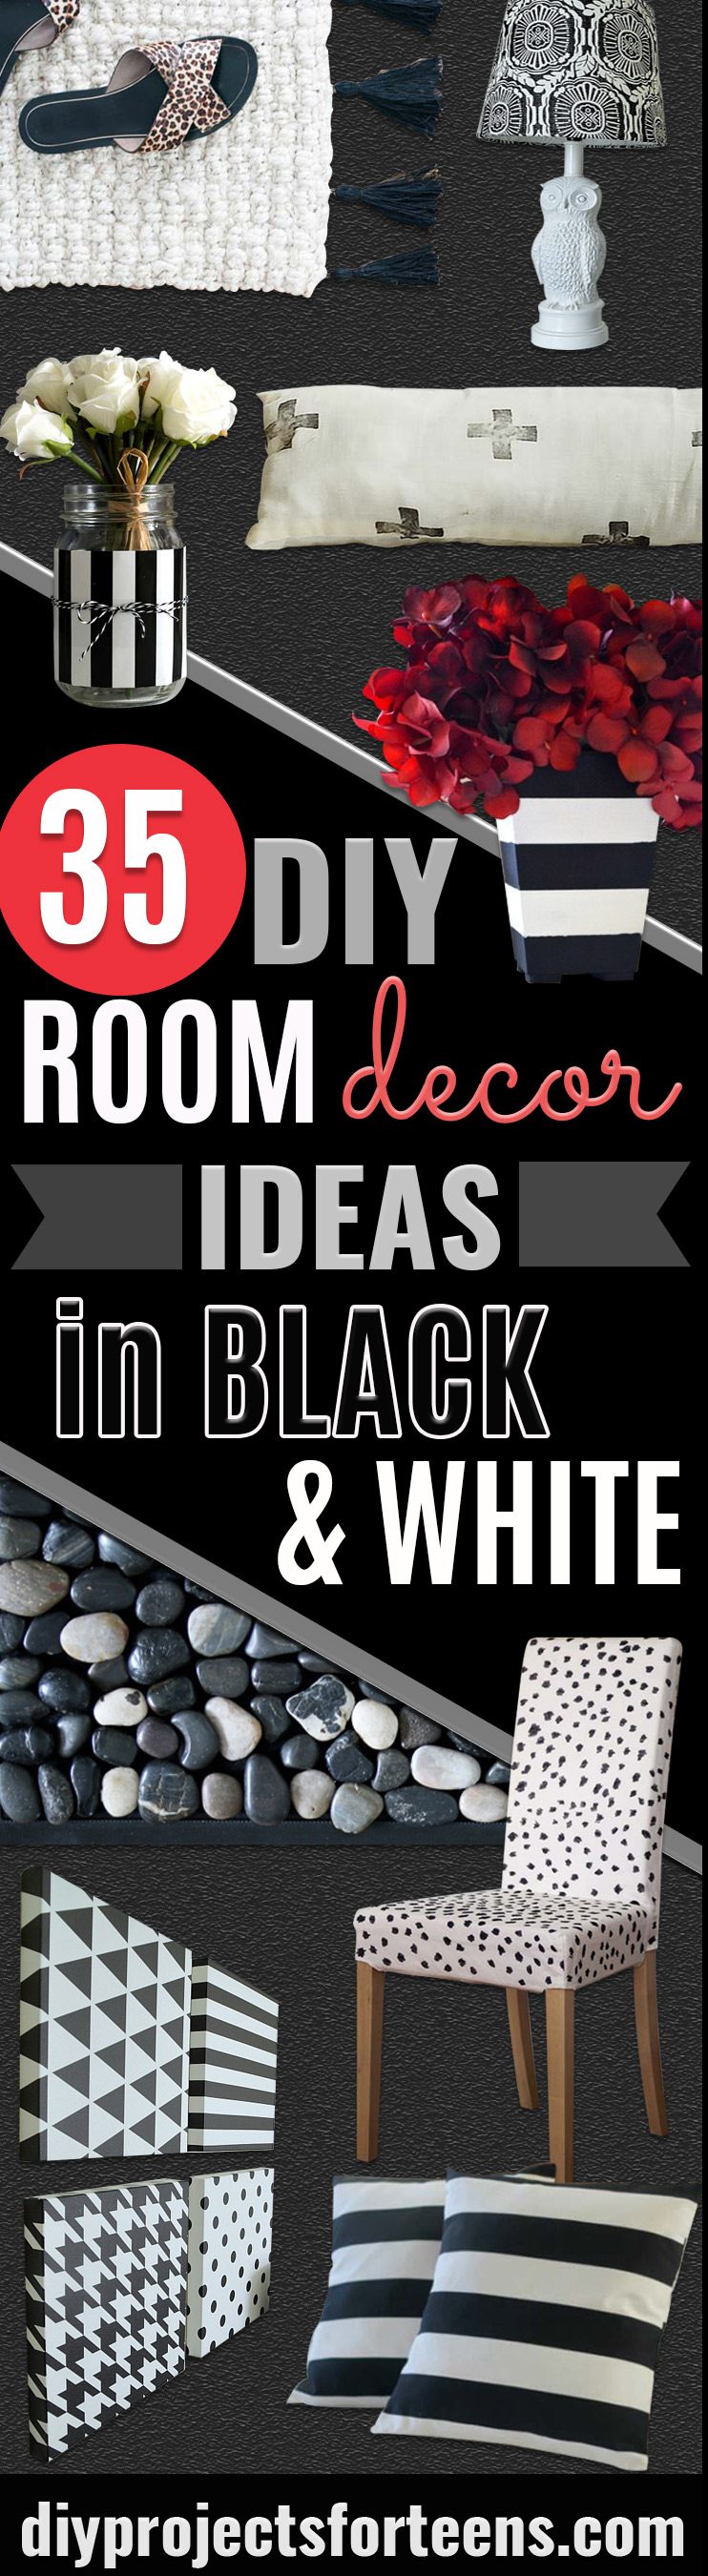 35 DIY Room Decor Ideas in Black and White